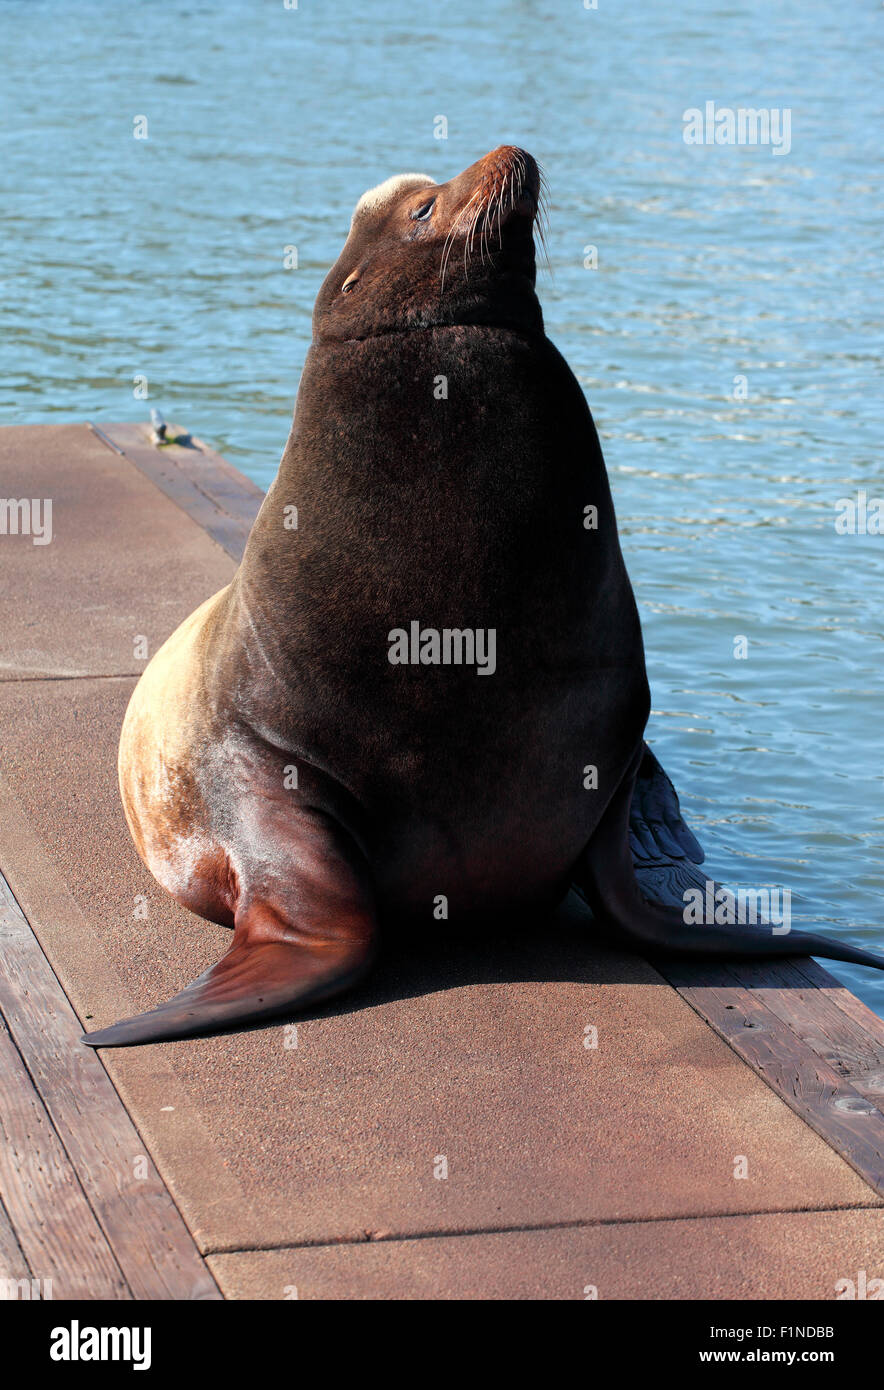 A large male sealion basking sunshine on a platform, Astoria OR. Stock Photo